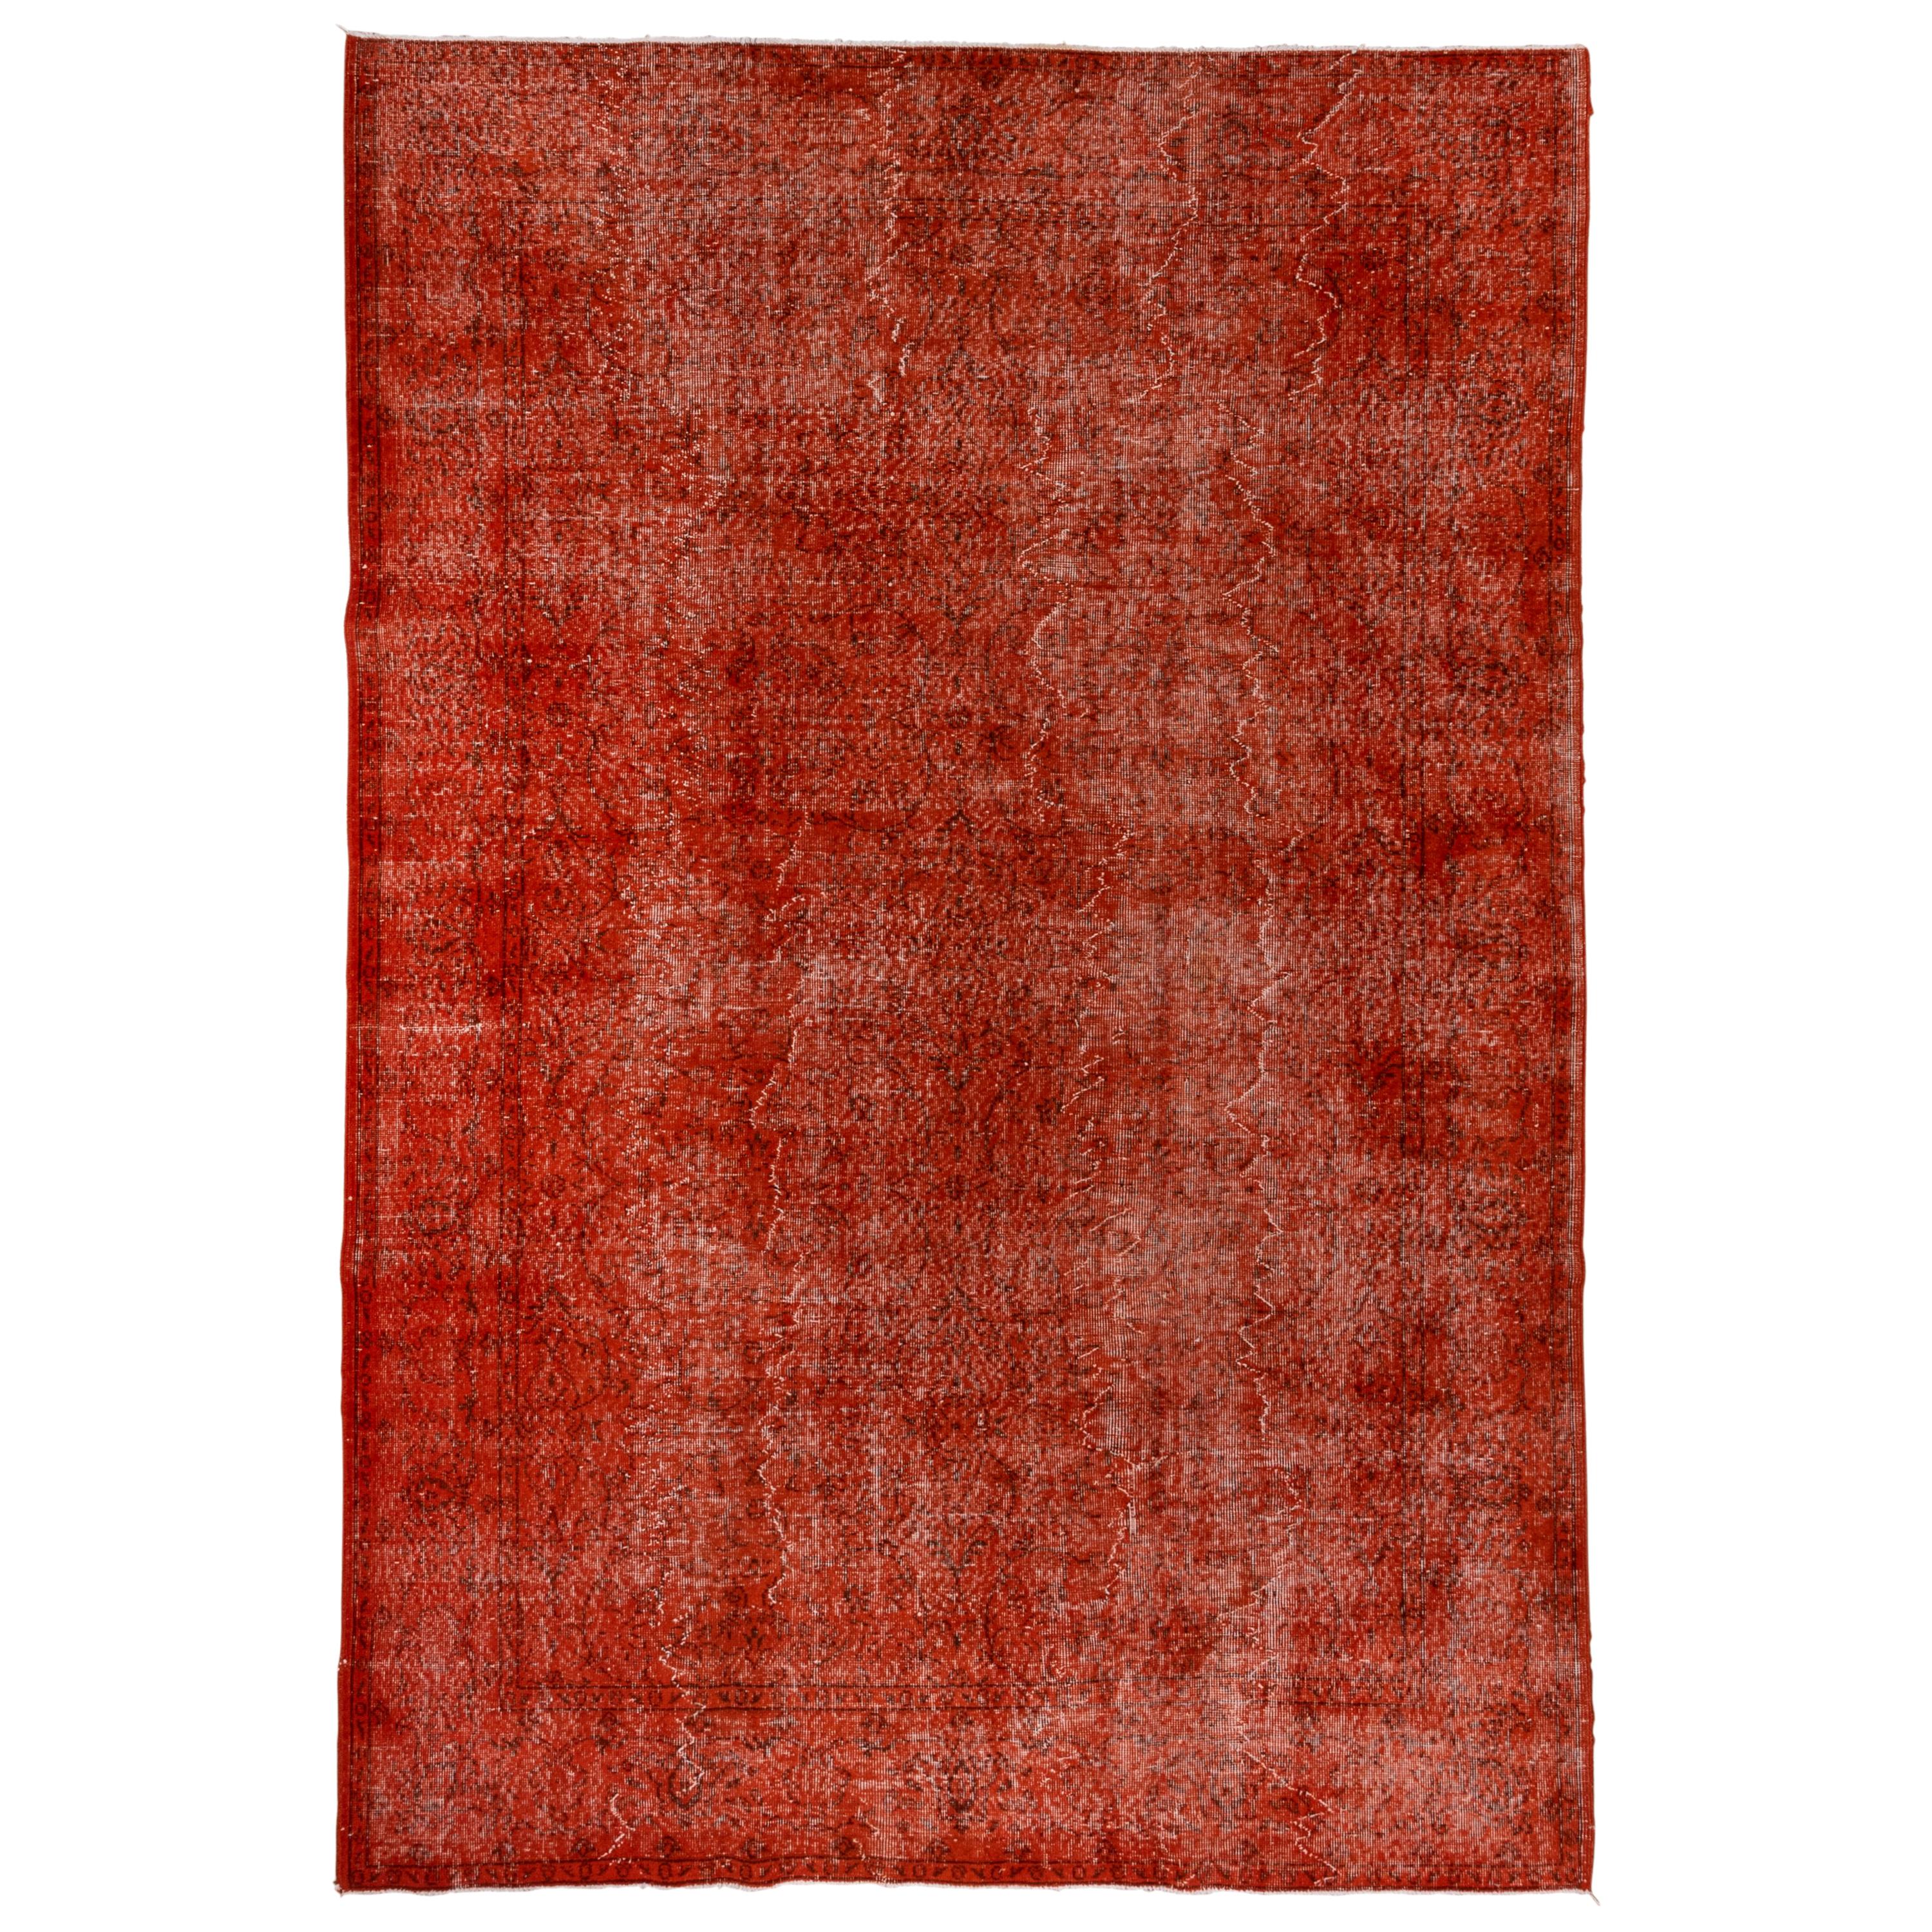 Vintage Red Overdyed Carpet